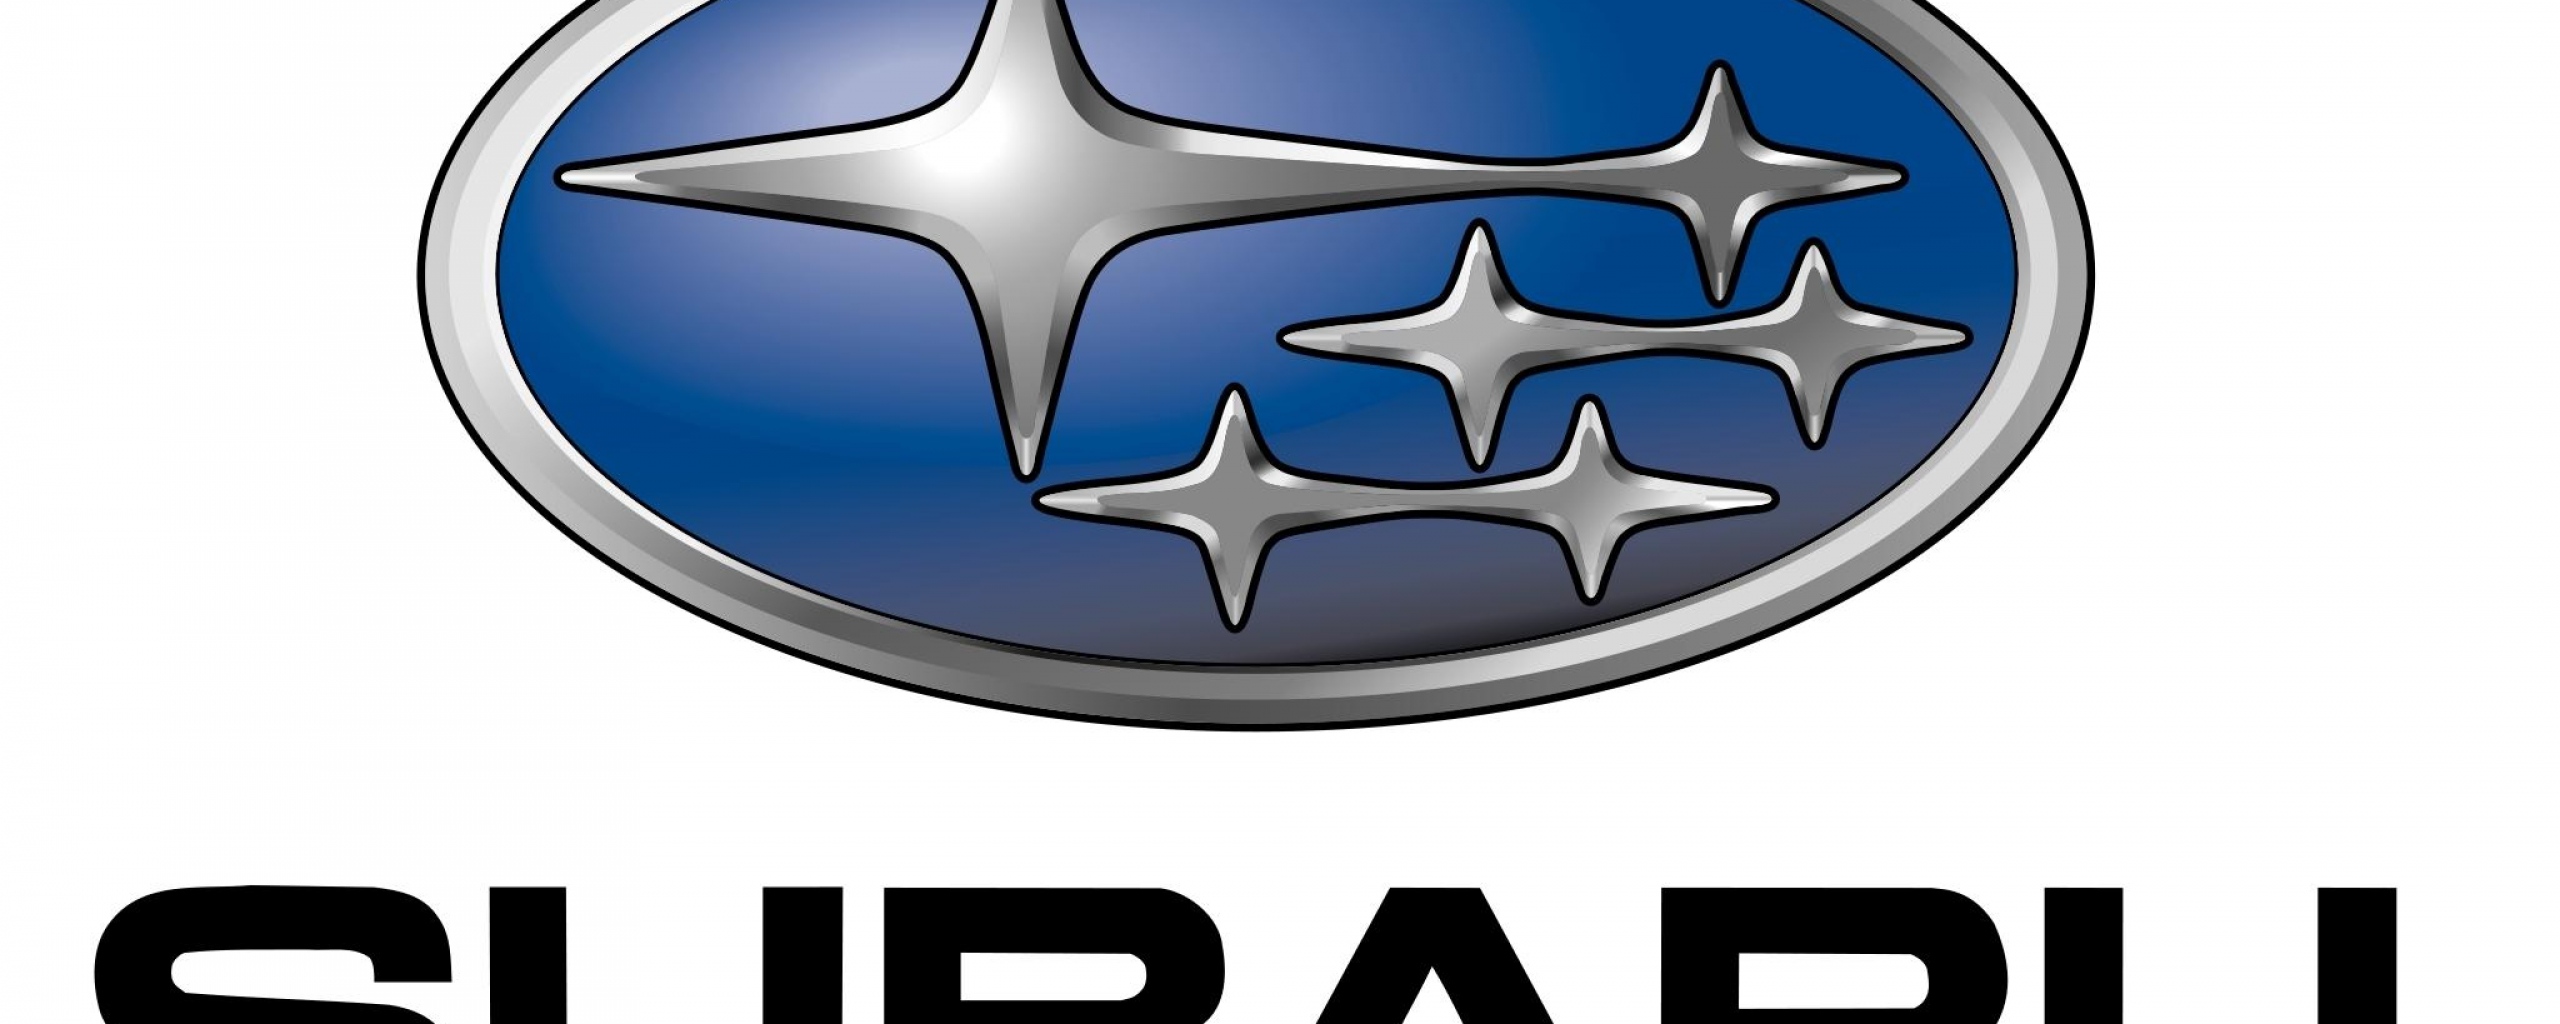 Download 2560x1024 Subaru Car Company Logo Wallpaper Background 2560x1024